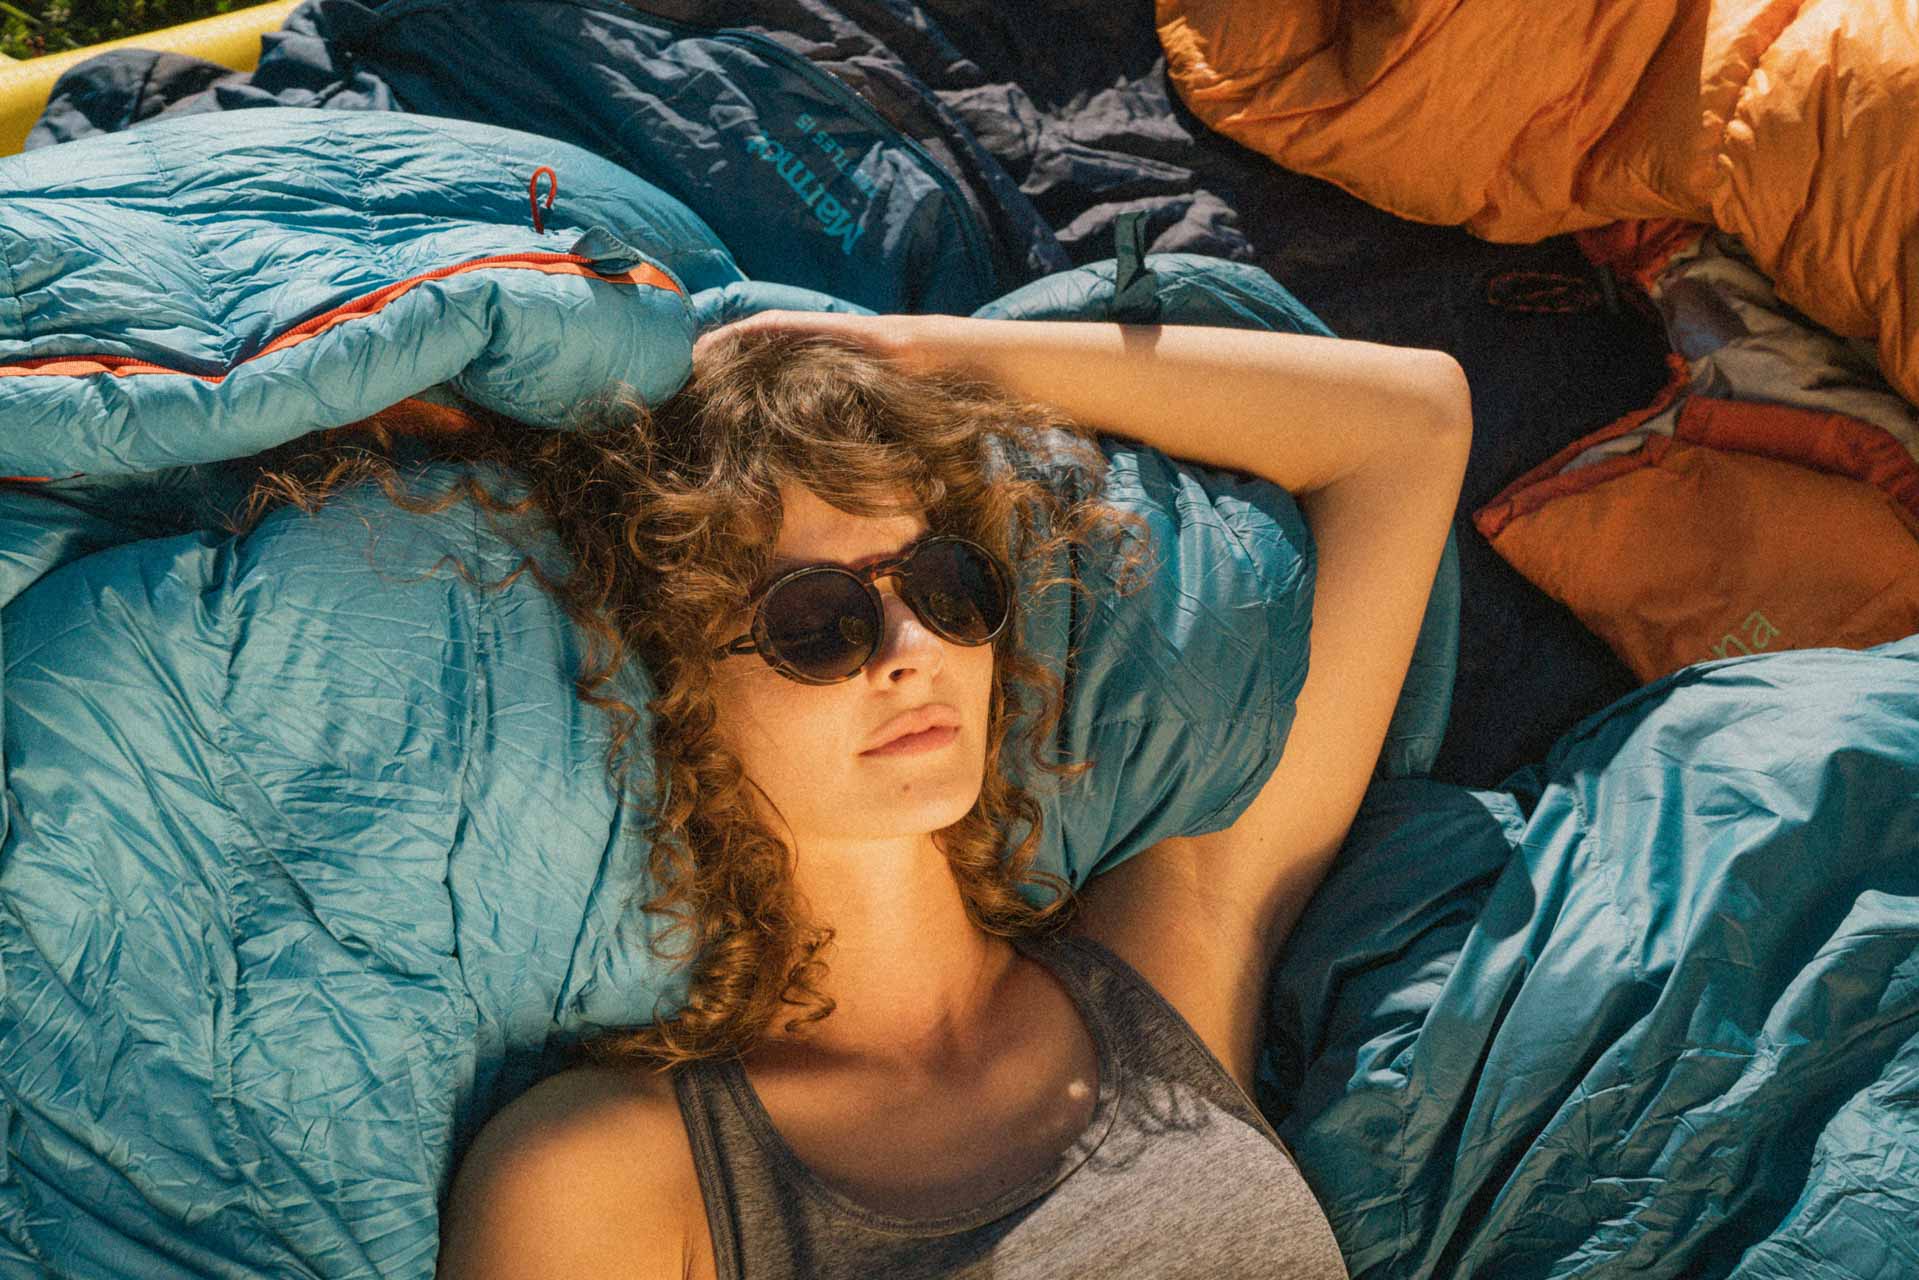 viale_tortoise_grey Woman sleeping on sleeping bag wearing Ombraz viale armless strap sunglasses